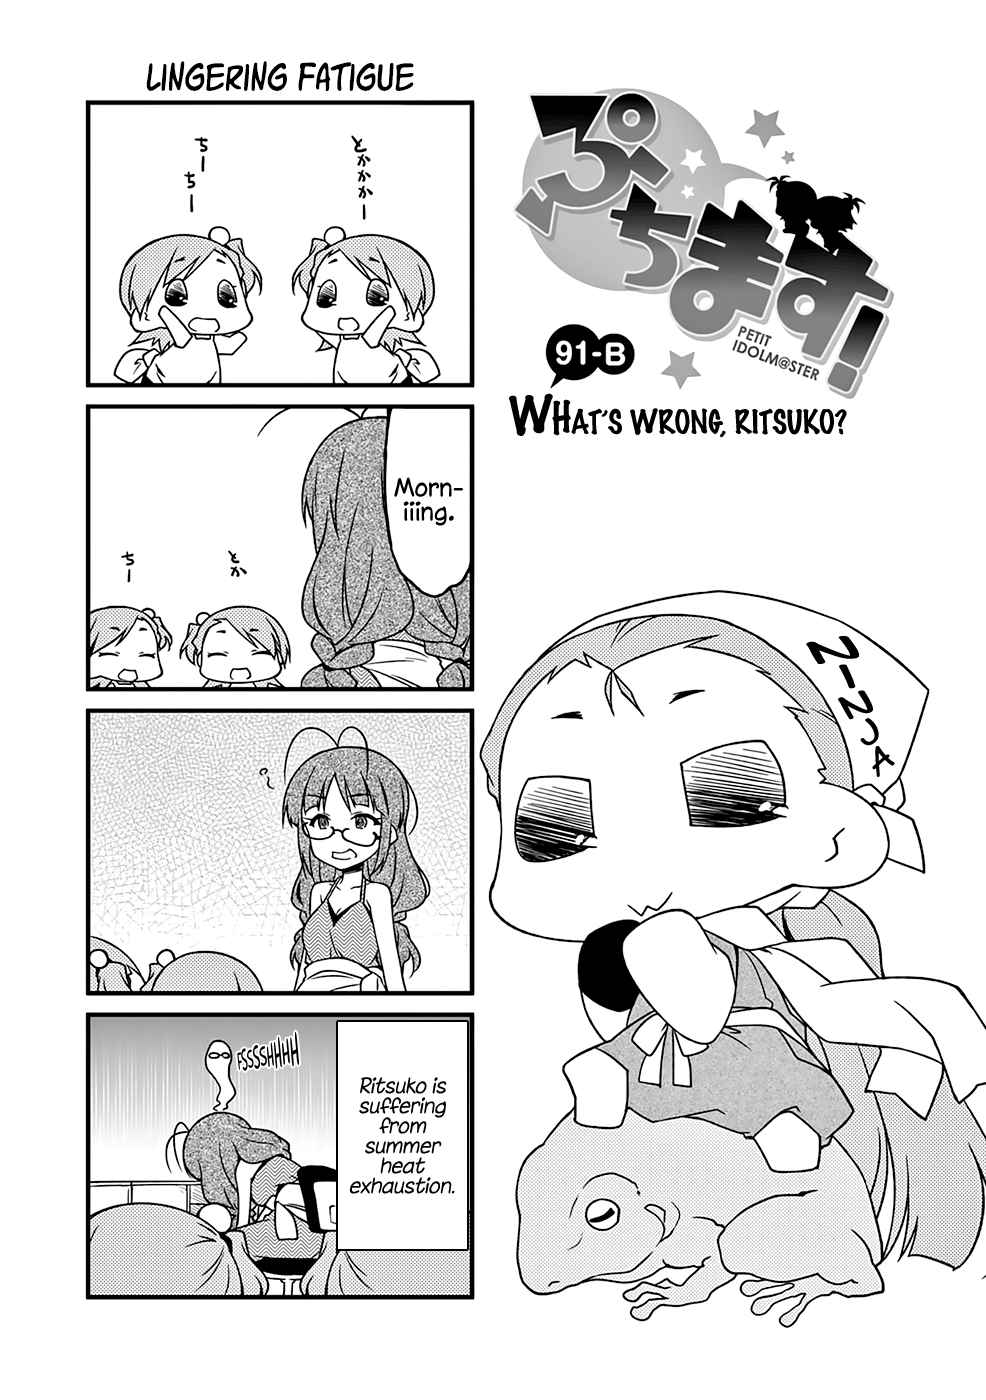 Puchimasu! Vol. 9 Ch. 91.2 What’s Wrong, Ritsuko?